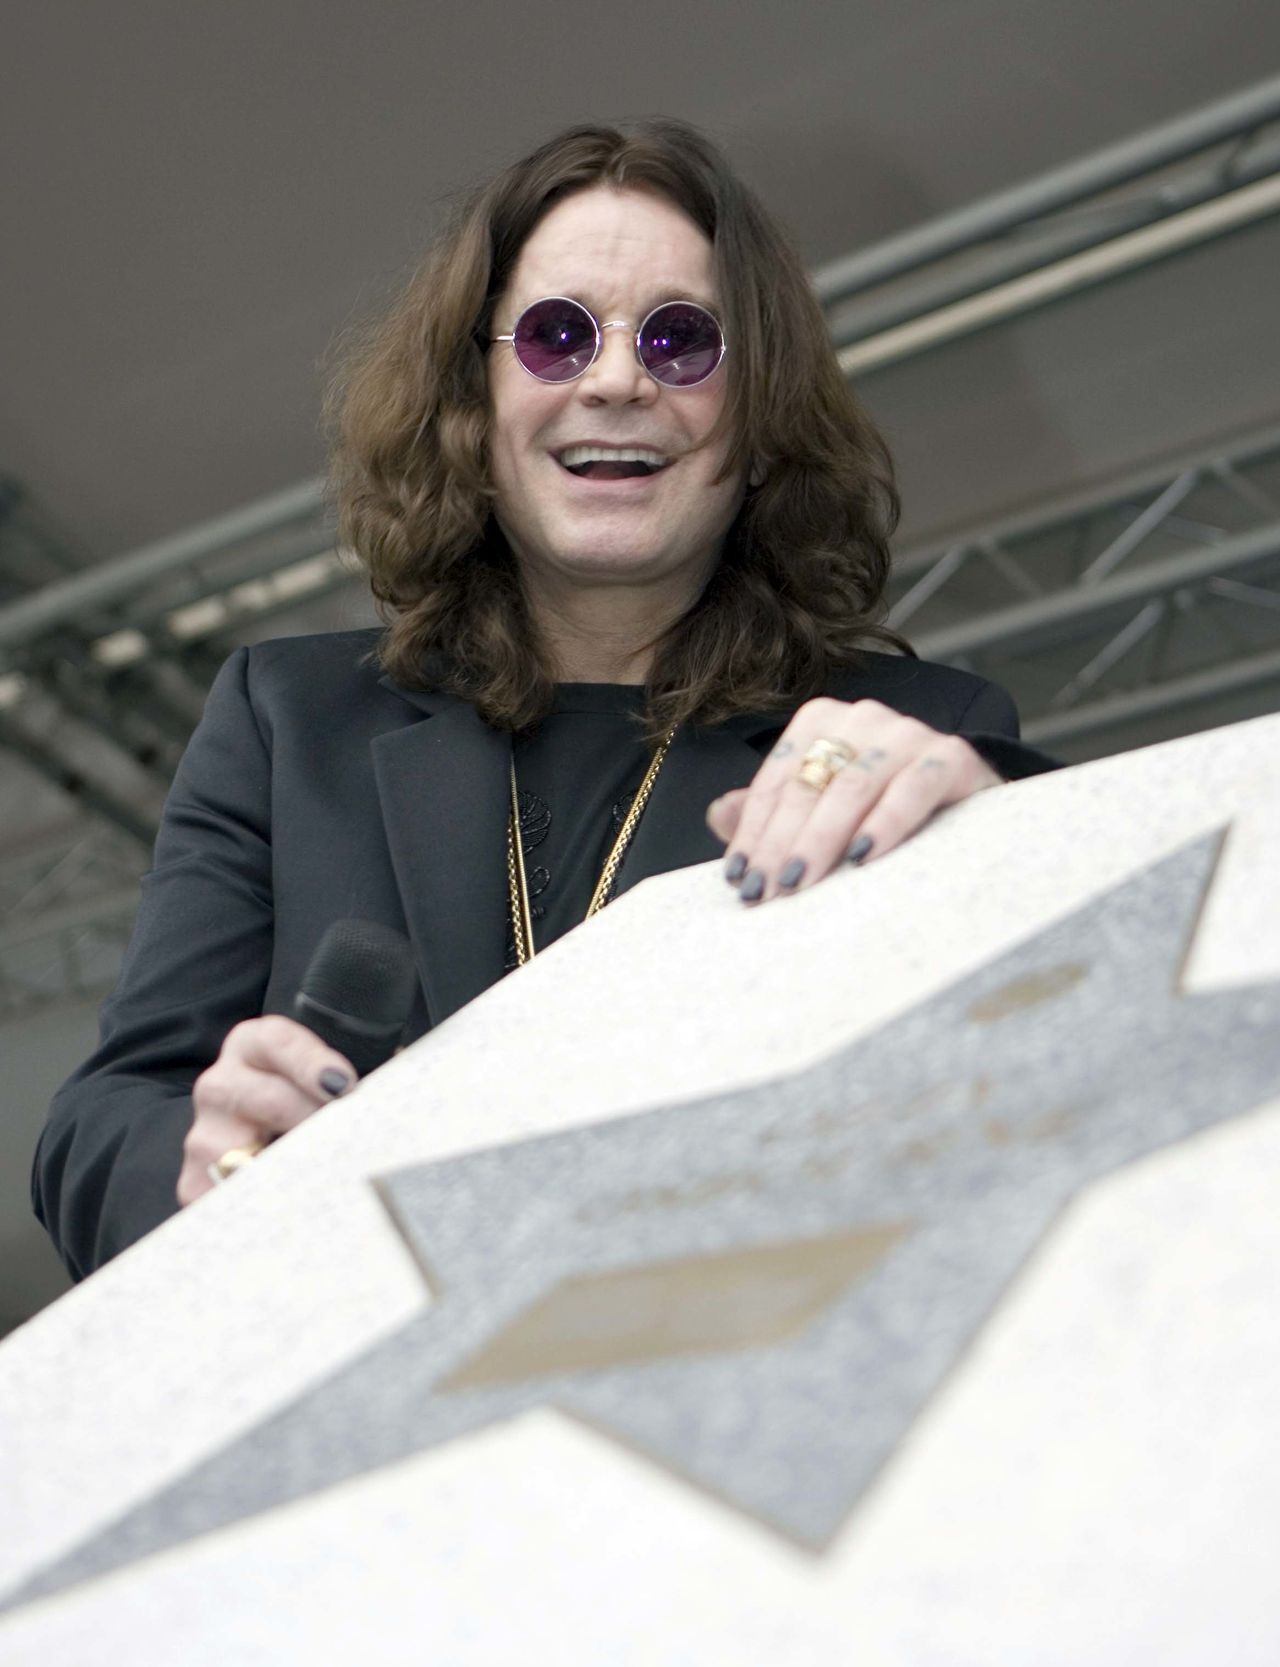 Ozzy was awarded a star on Birmingham's Walk Of Stars in 2007